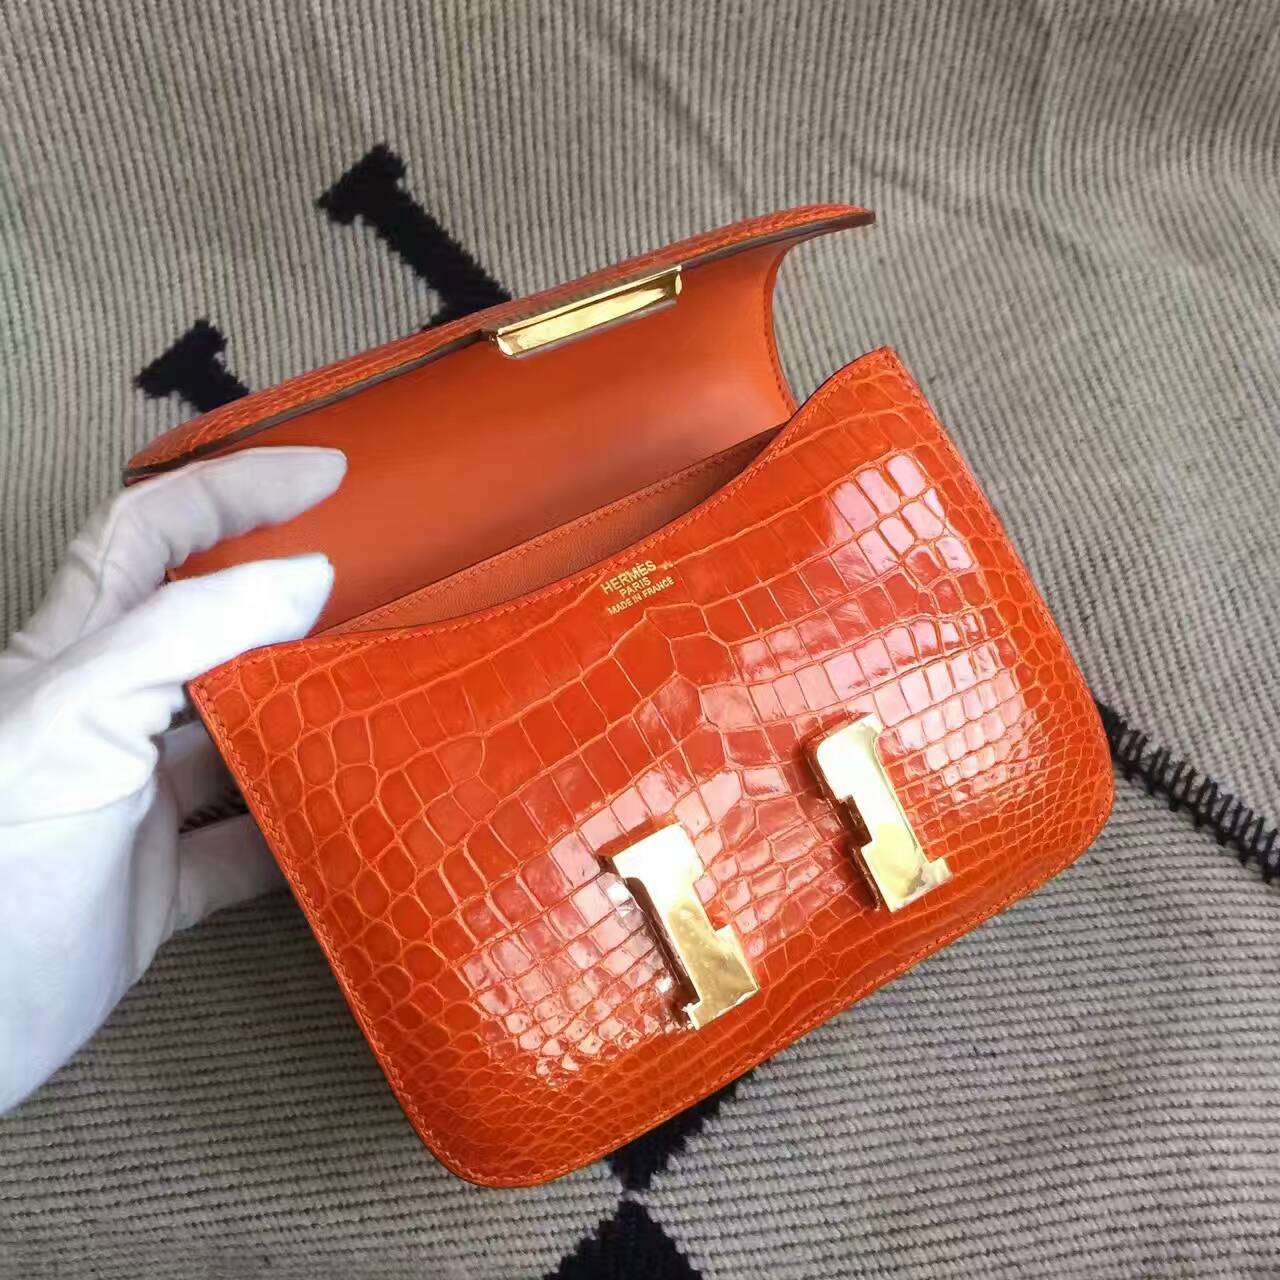 Discount Hermes 93 Orange Crocodile Shiny Leather Constance Bag 19cm